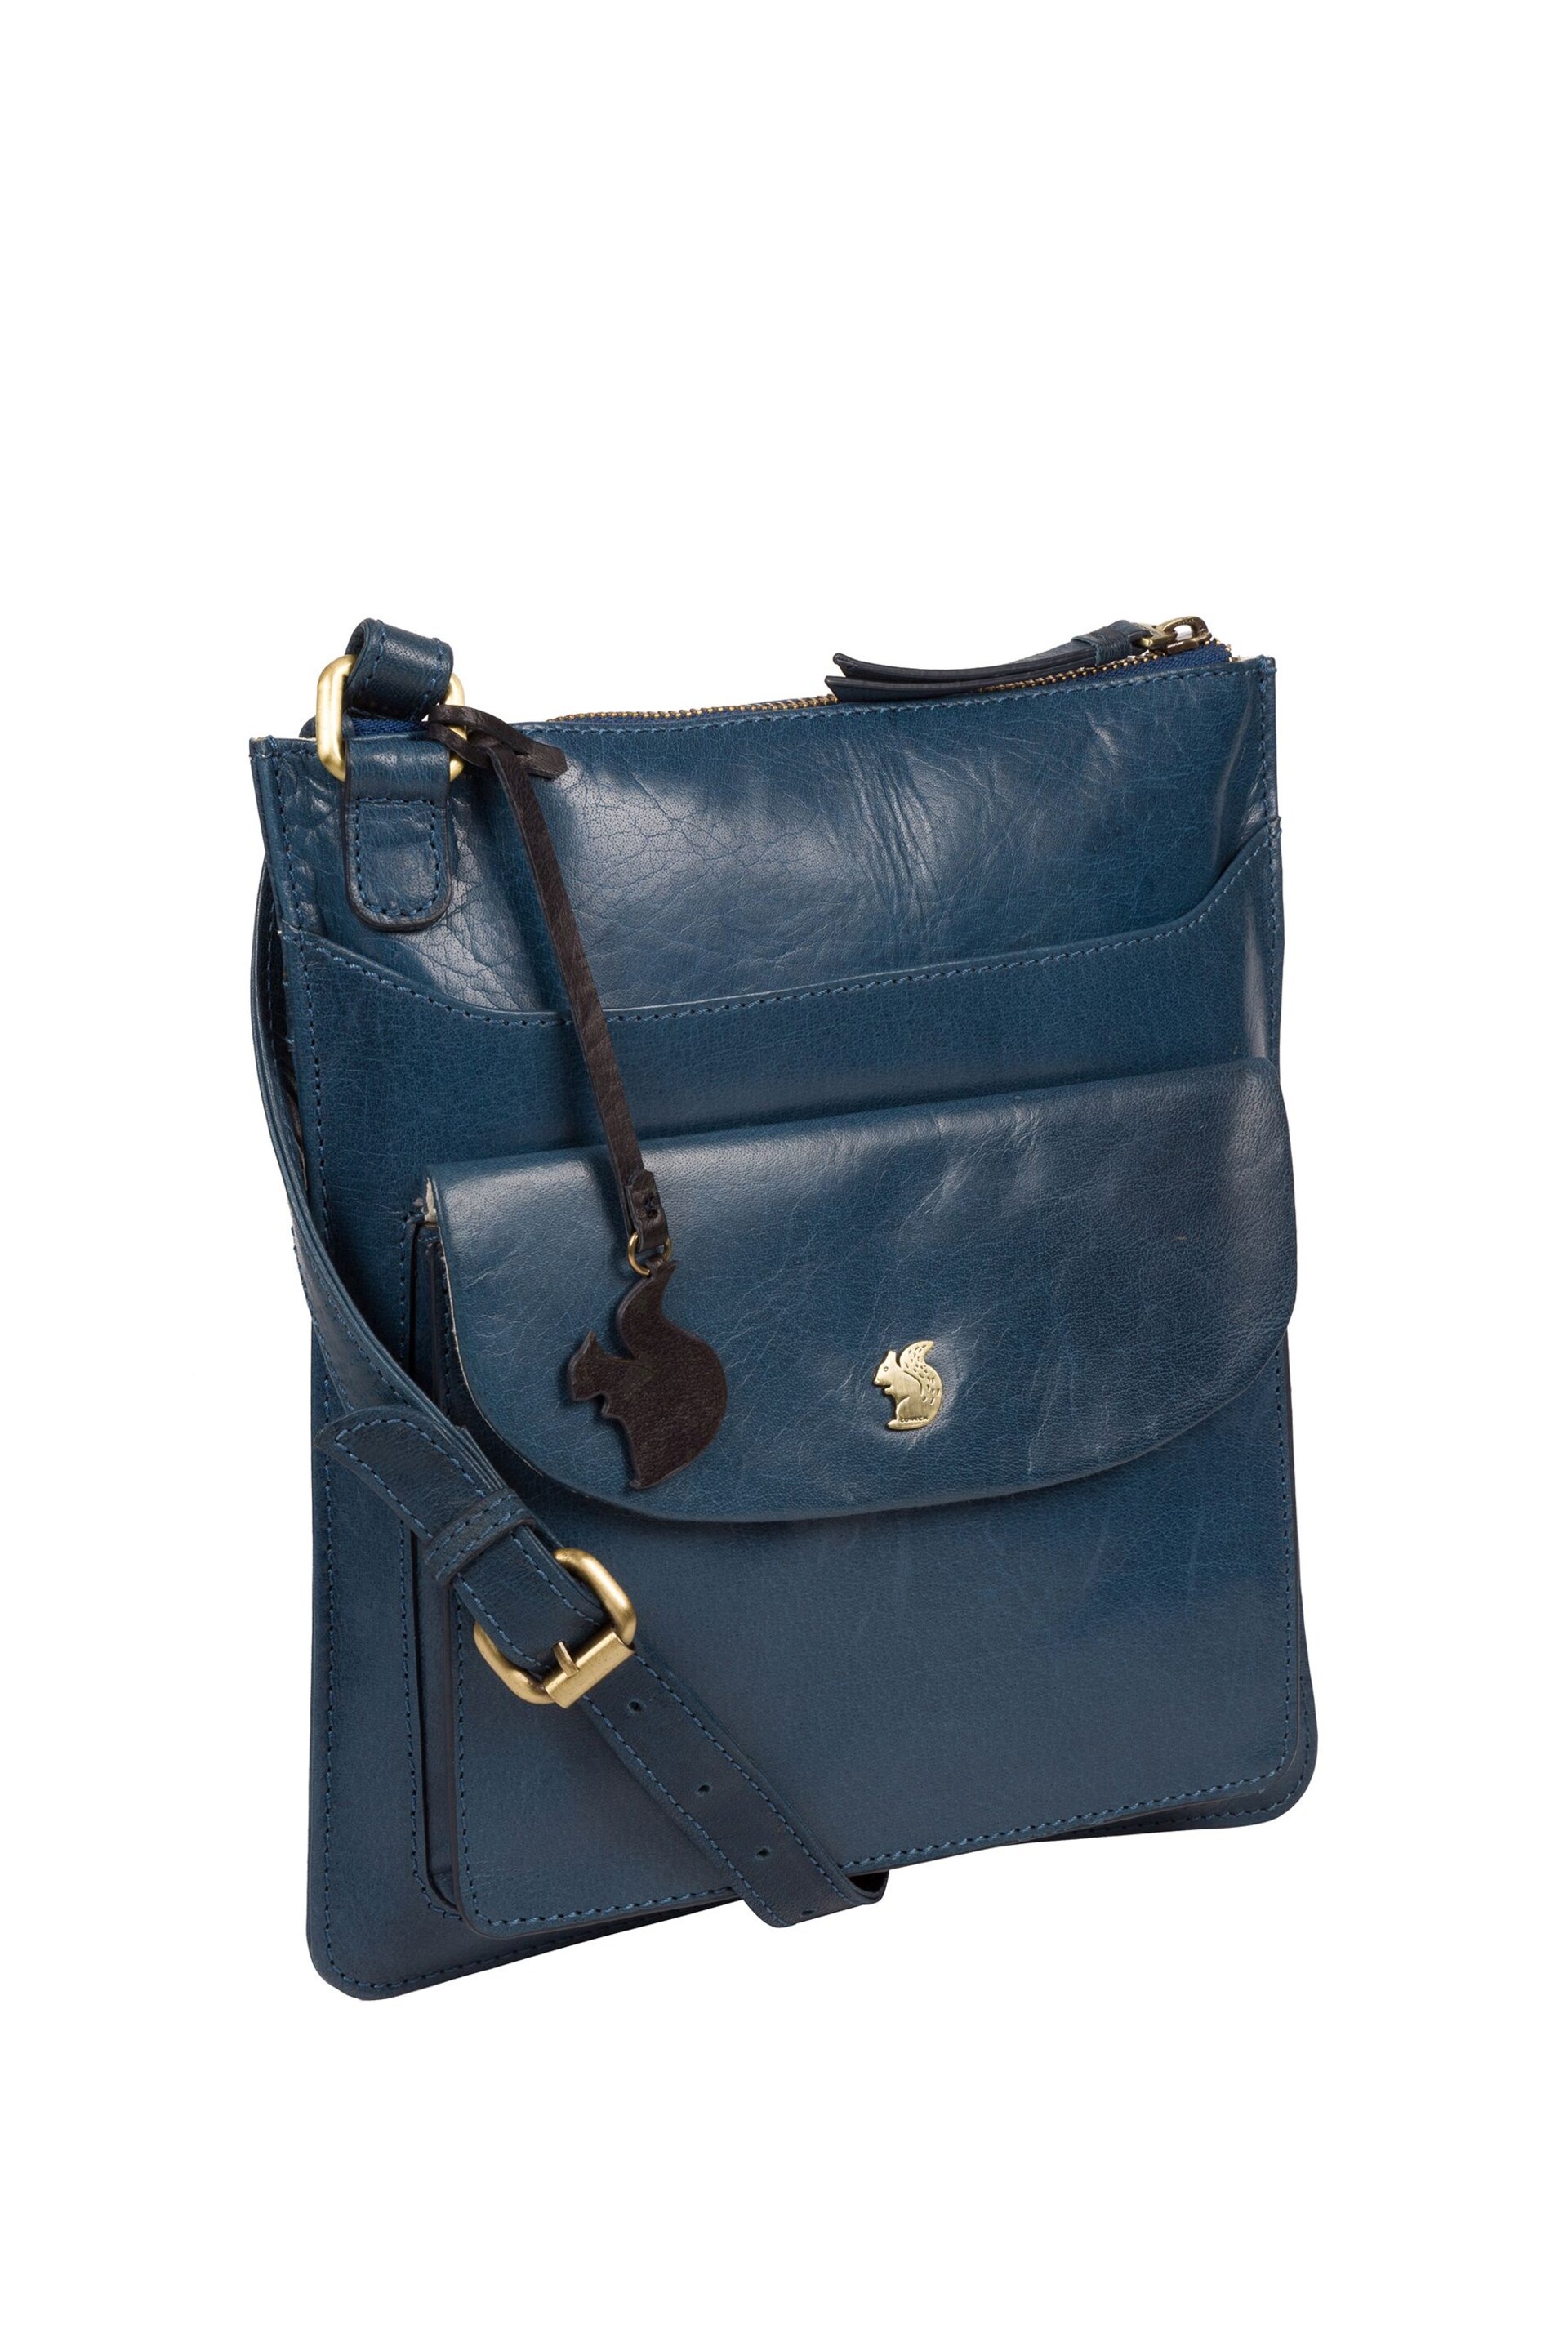 Conkca Lauryn Leather Cross-Body Bag - Image 3 of 5